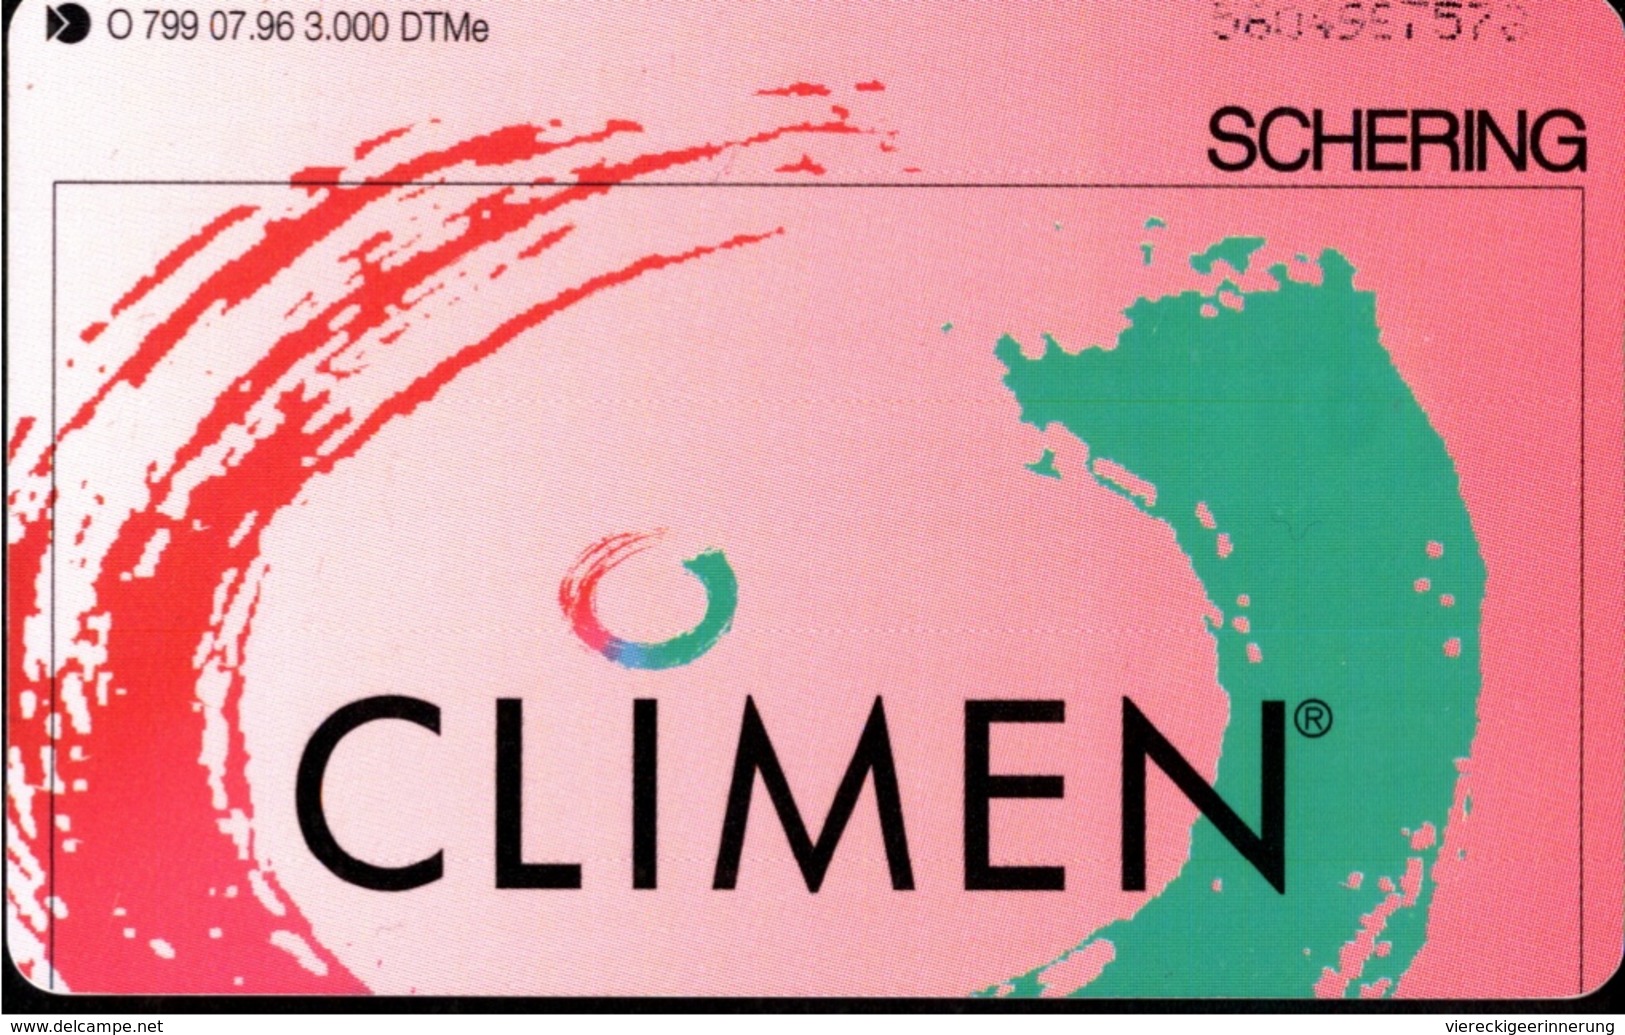 ! Telefonkarte, Telecarte, Phonecard, 1996, O799, Auflage 3000, Schering, Climen, Germany - O-Series : Customers Sets